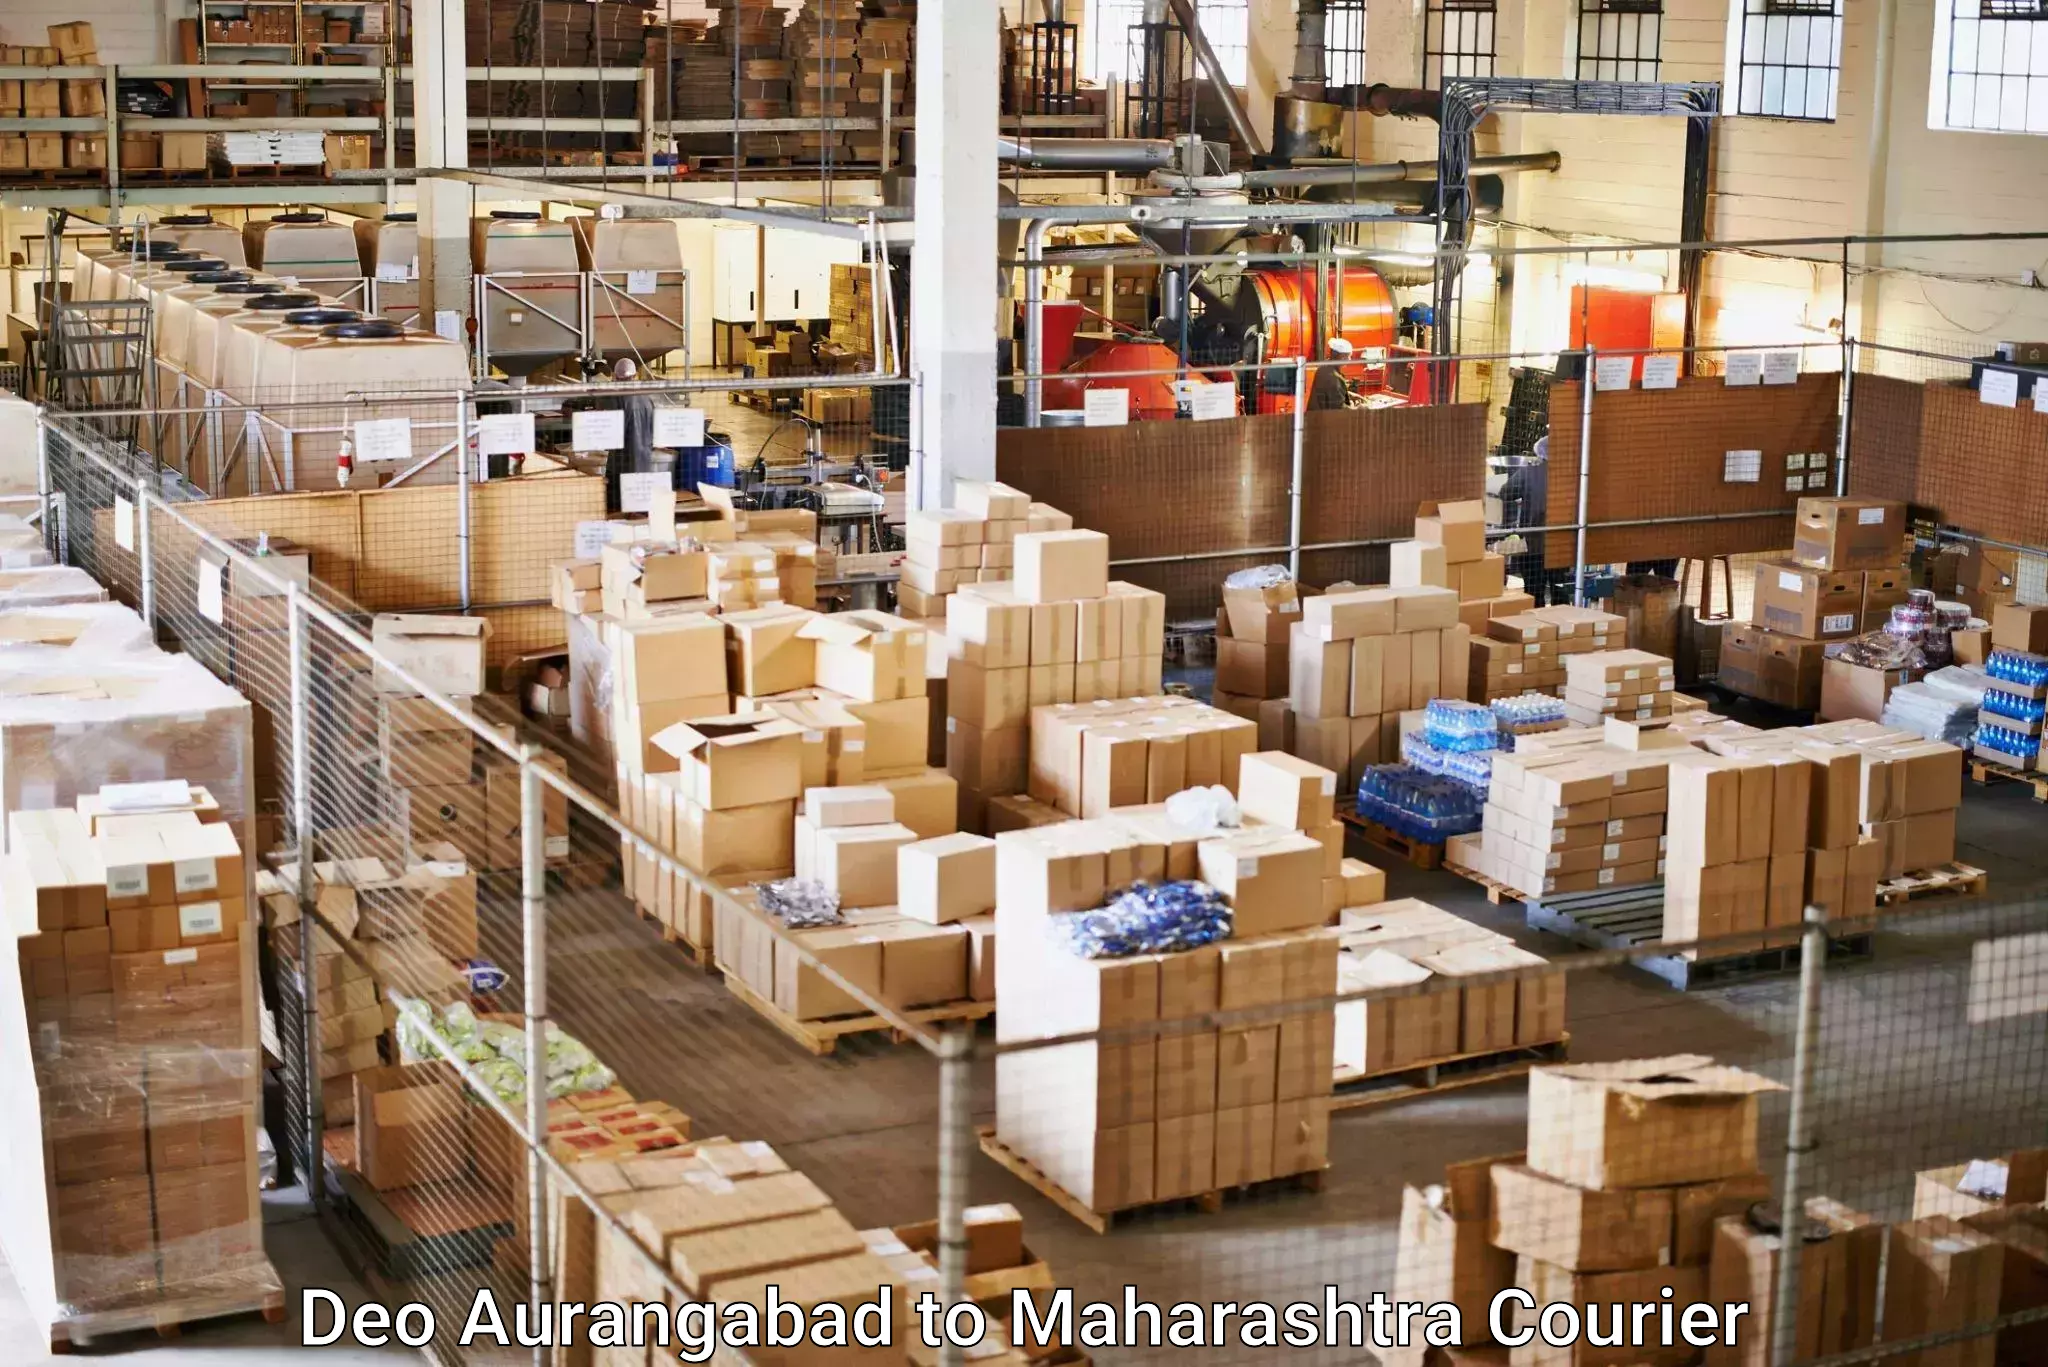 Package tracking in Deo Aurangabad to Maharashtra